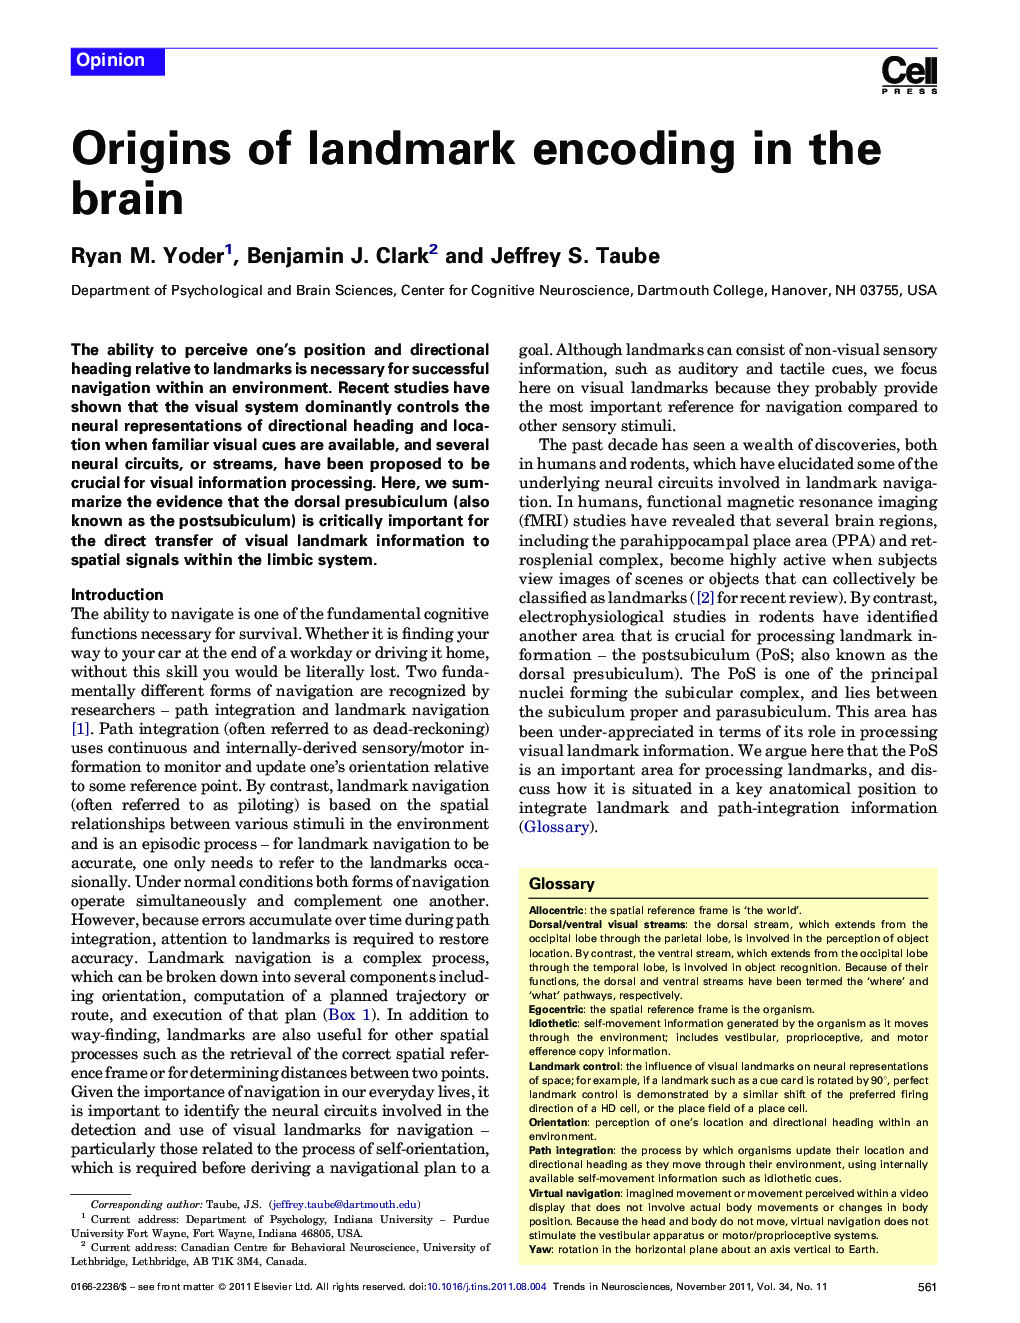 Origins of landmark encoding in the brain